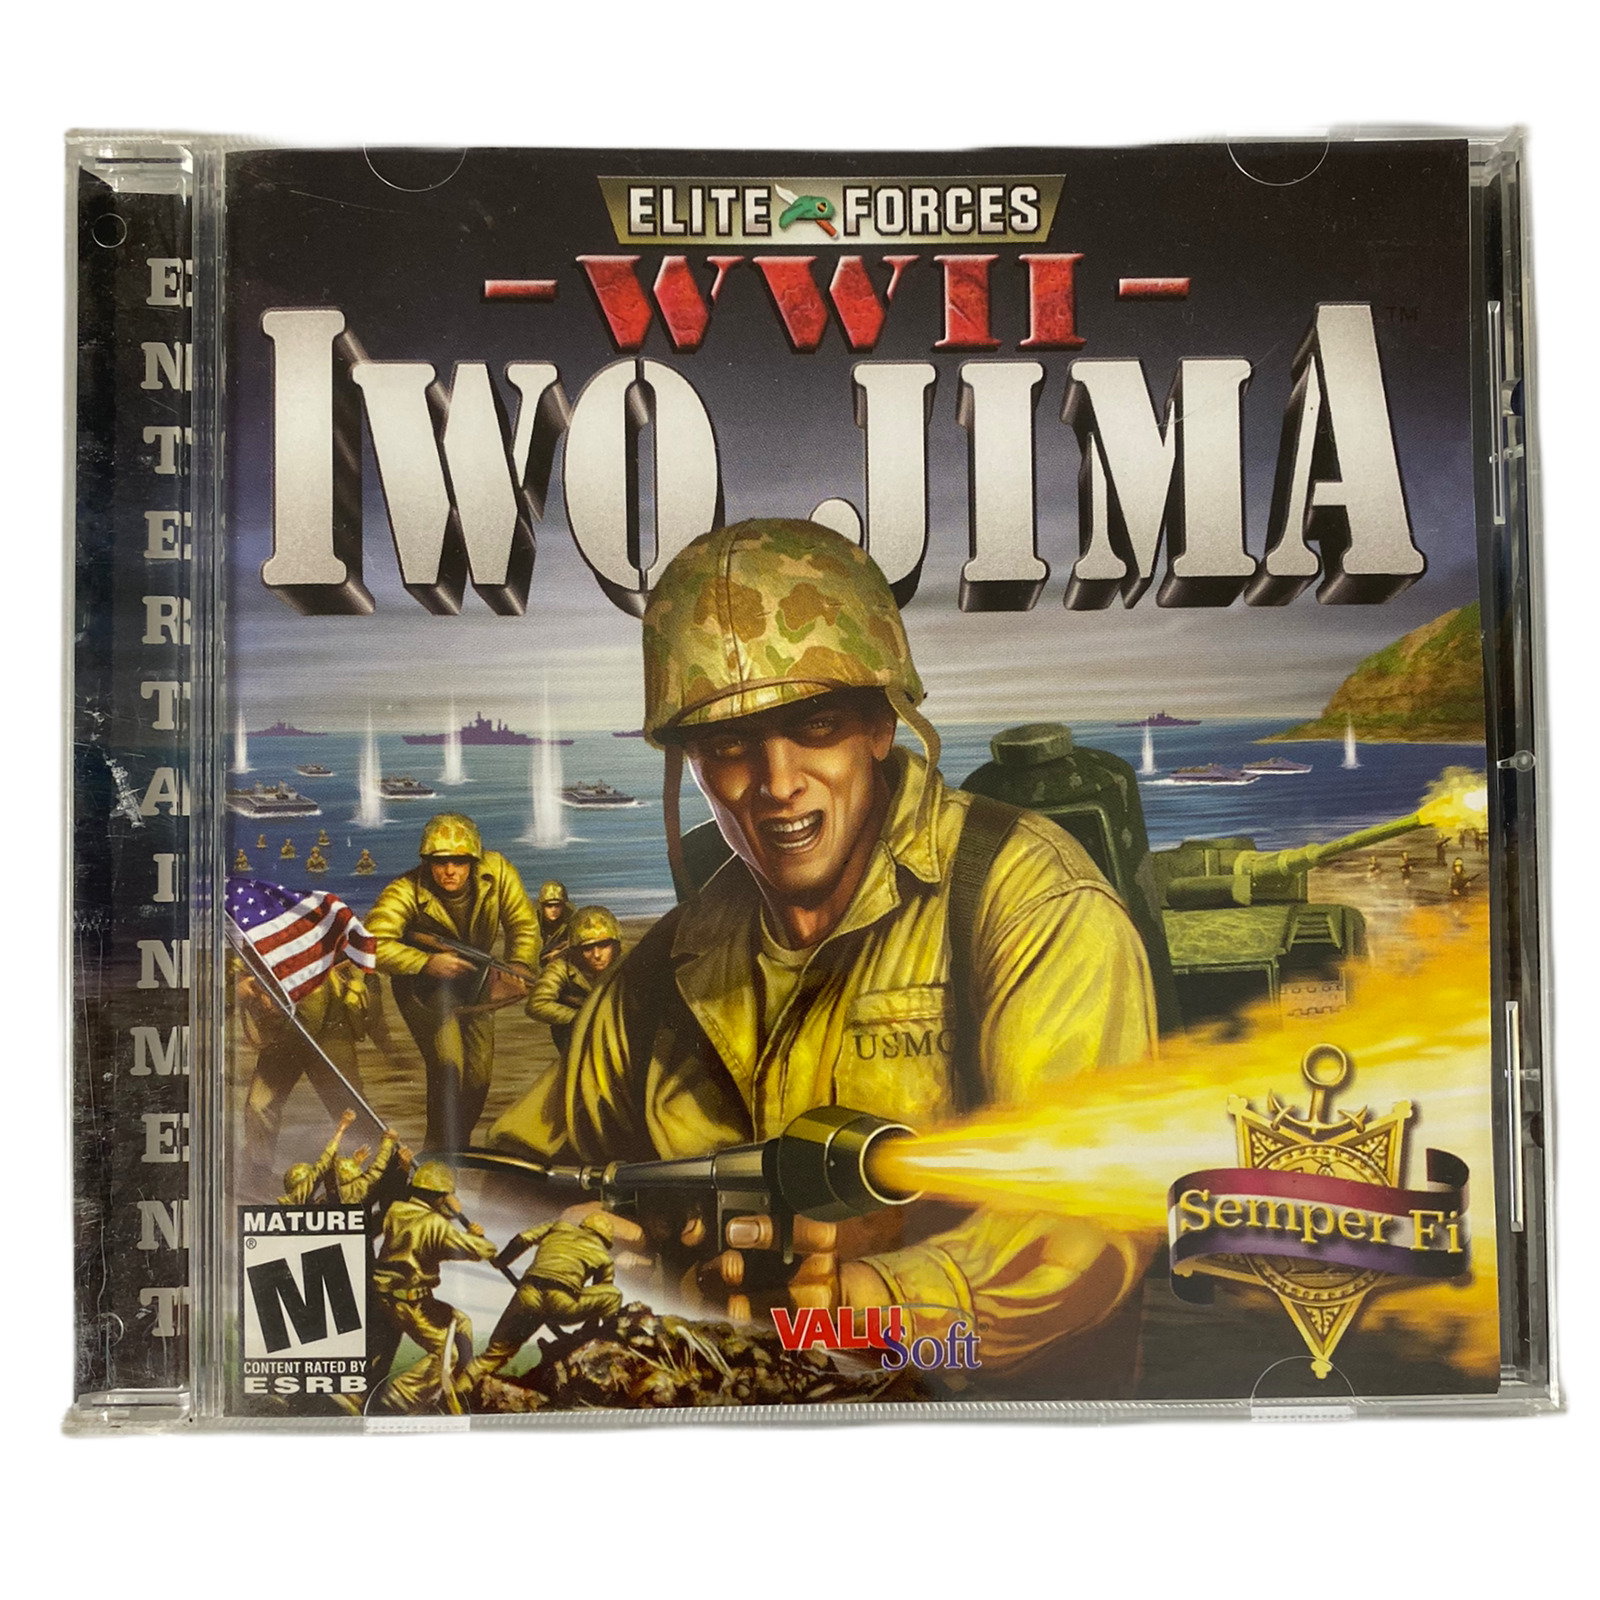 WWII: Iwo Jima PC CD Elite Forces By Valu Soft